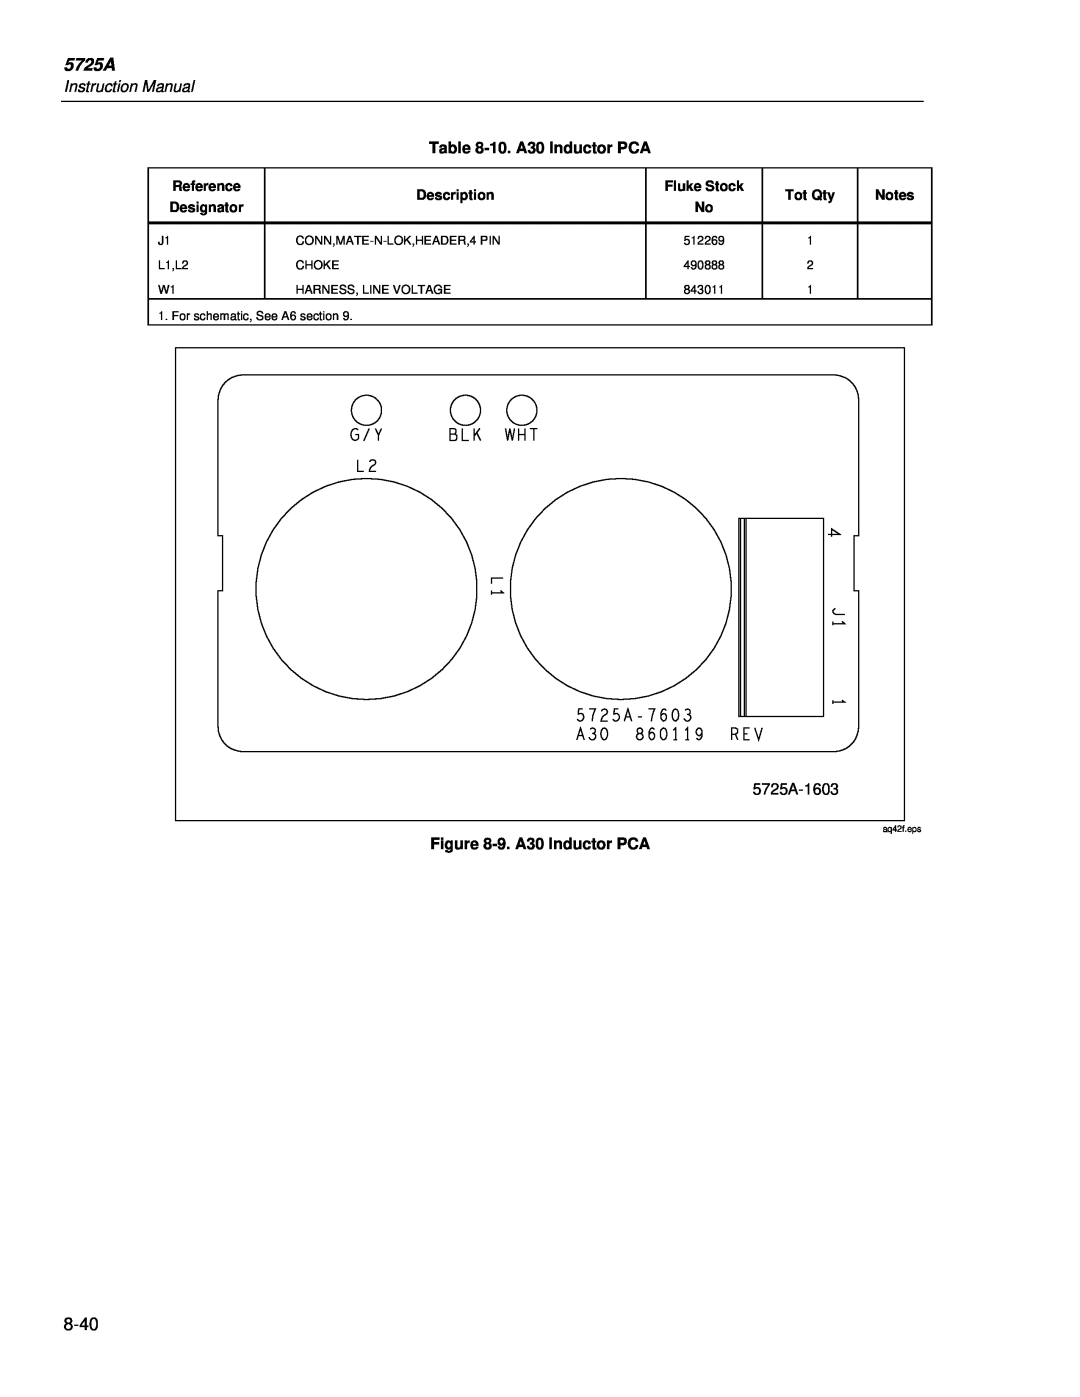 Fluke 5725A instruction manual Instruction Manual, 10.A30 Inductor PCA, 9.A30 Inductor PCA, Designator, aq42f.eps 